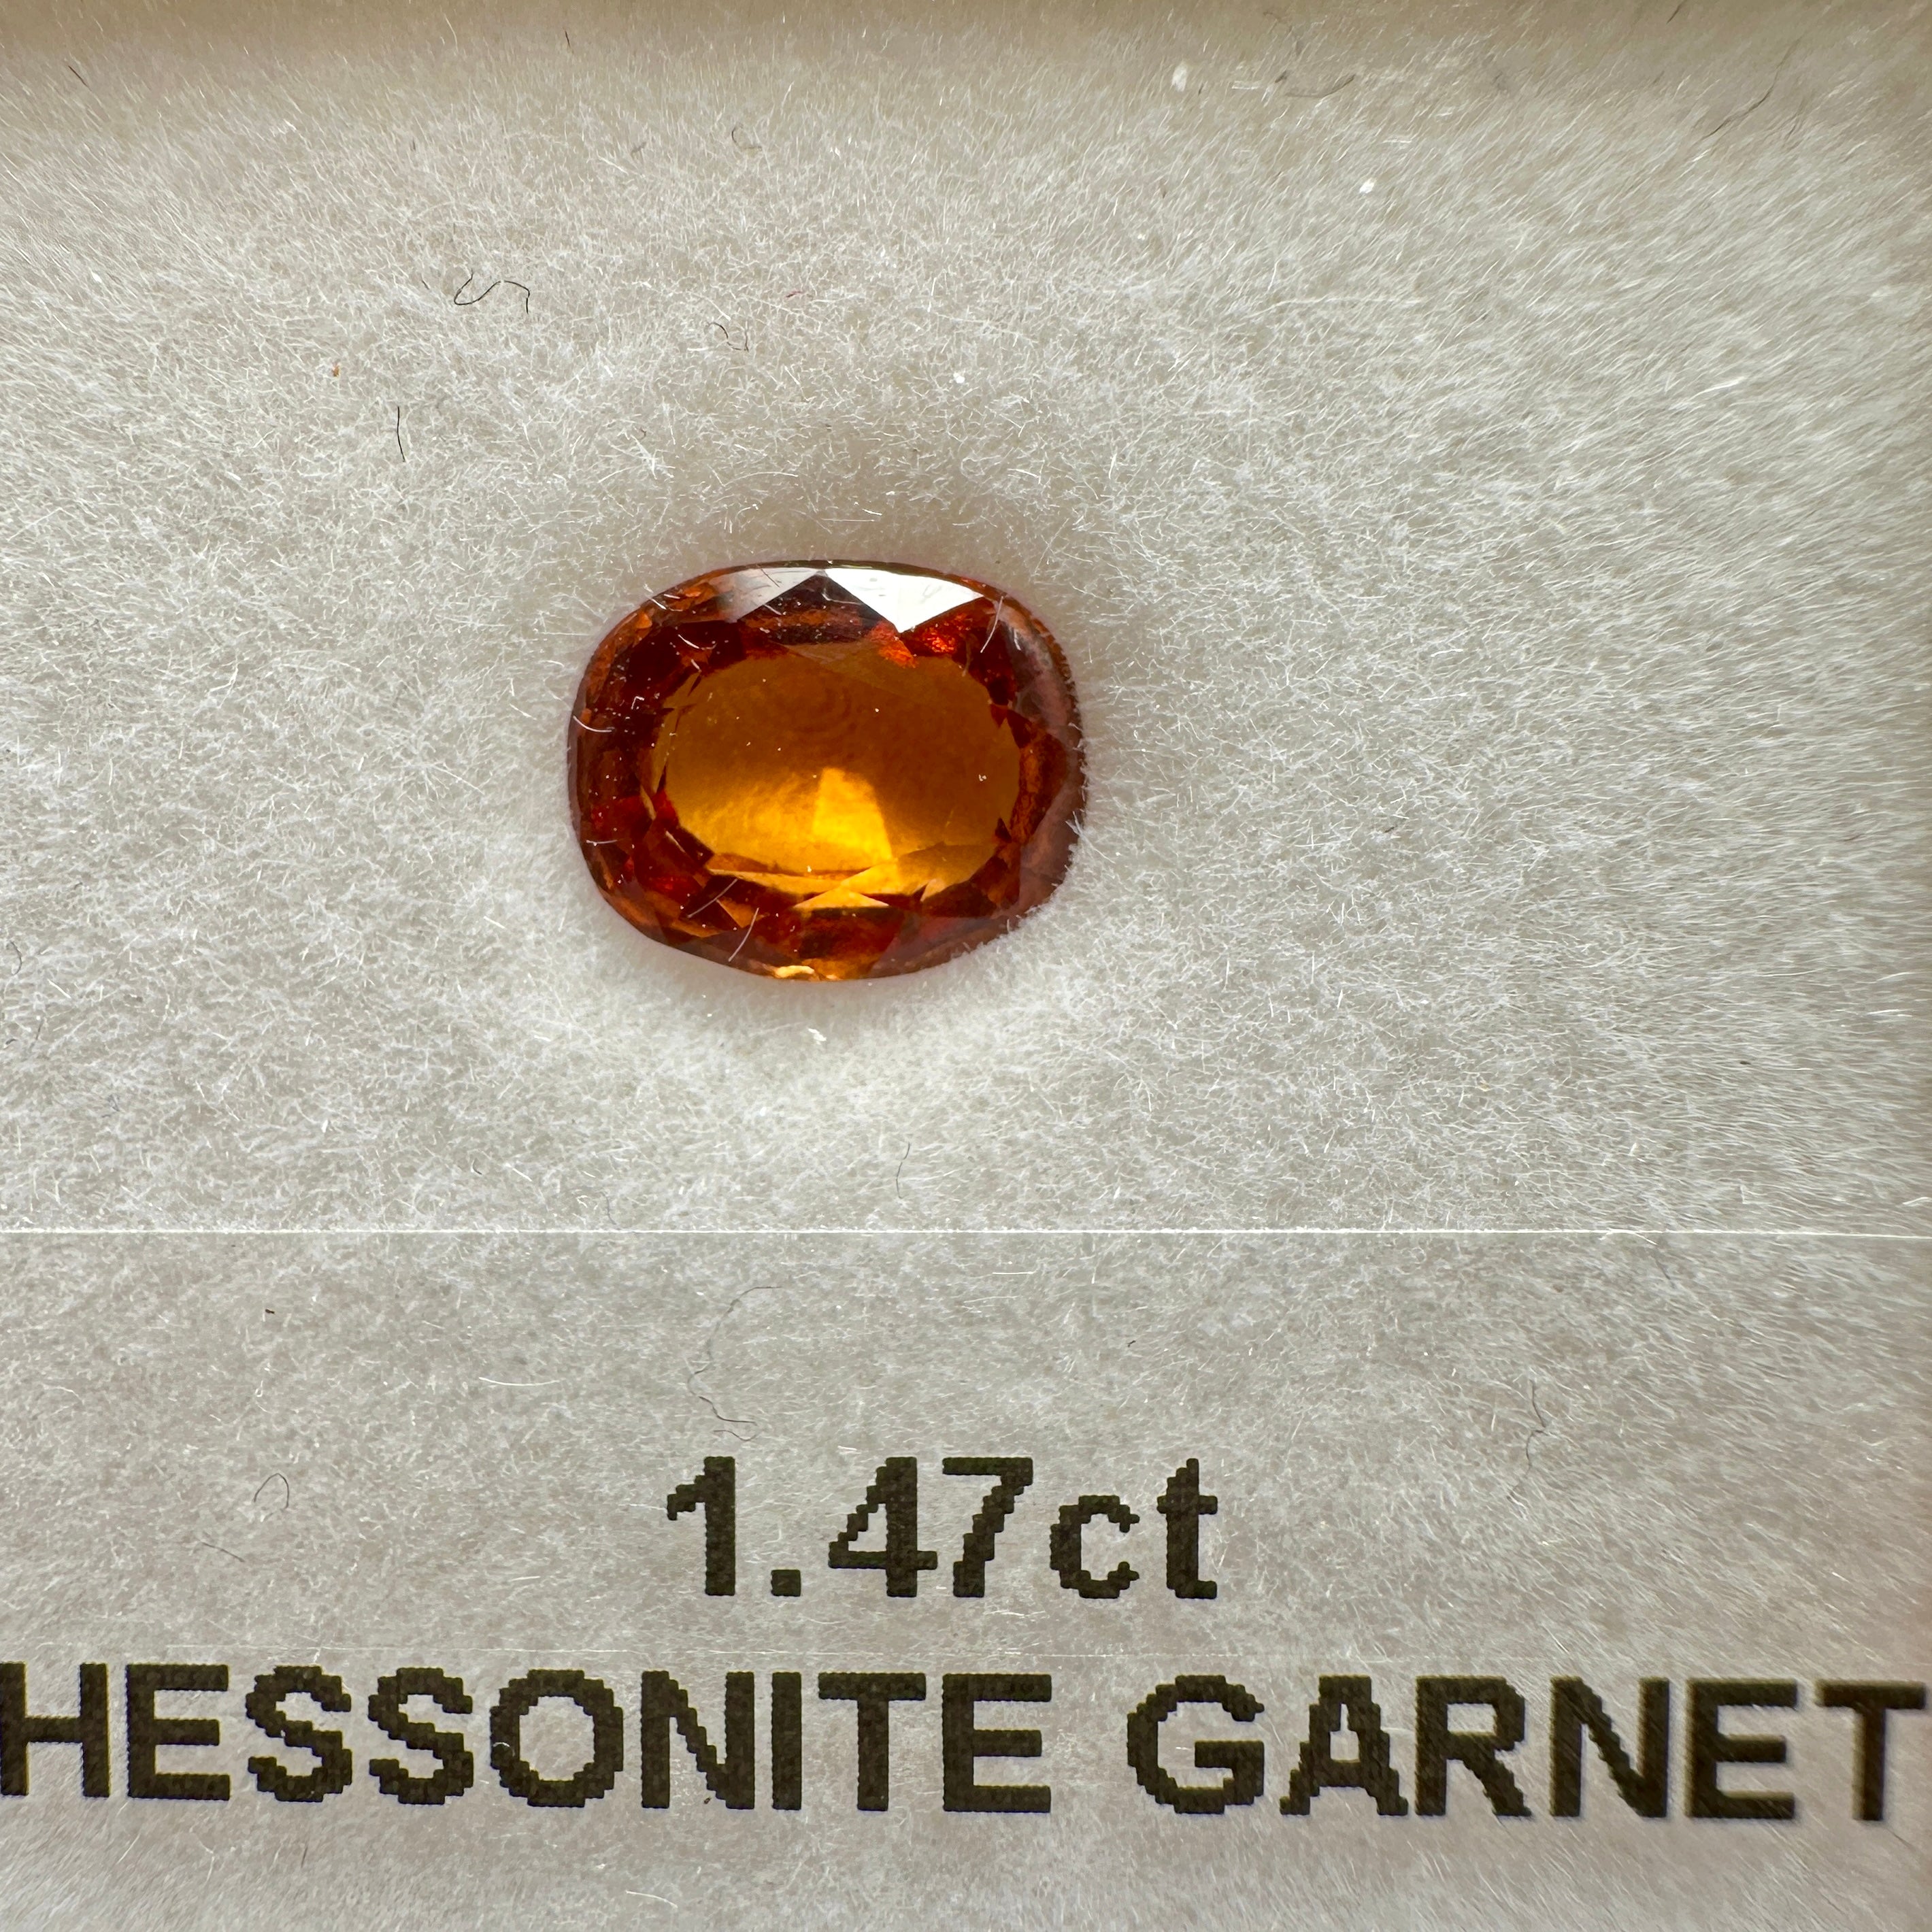 1.47ct Hessonite Garnet, Untreated Unheated, native cut